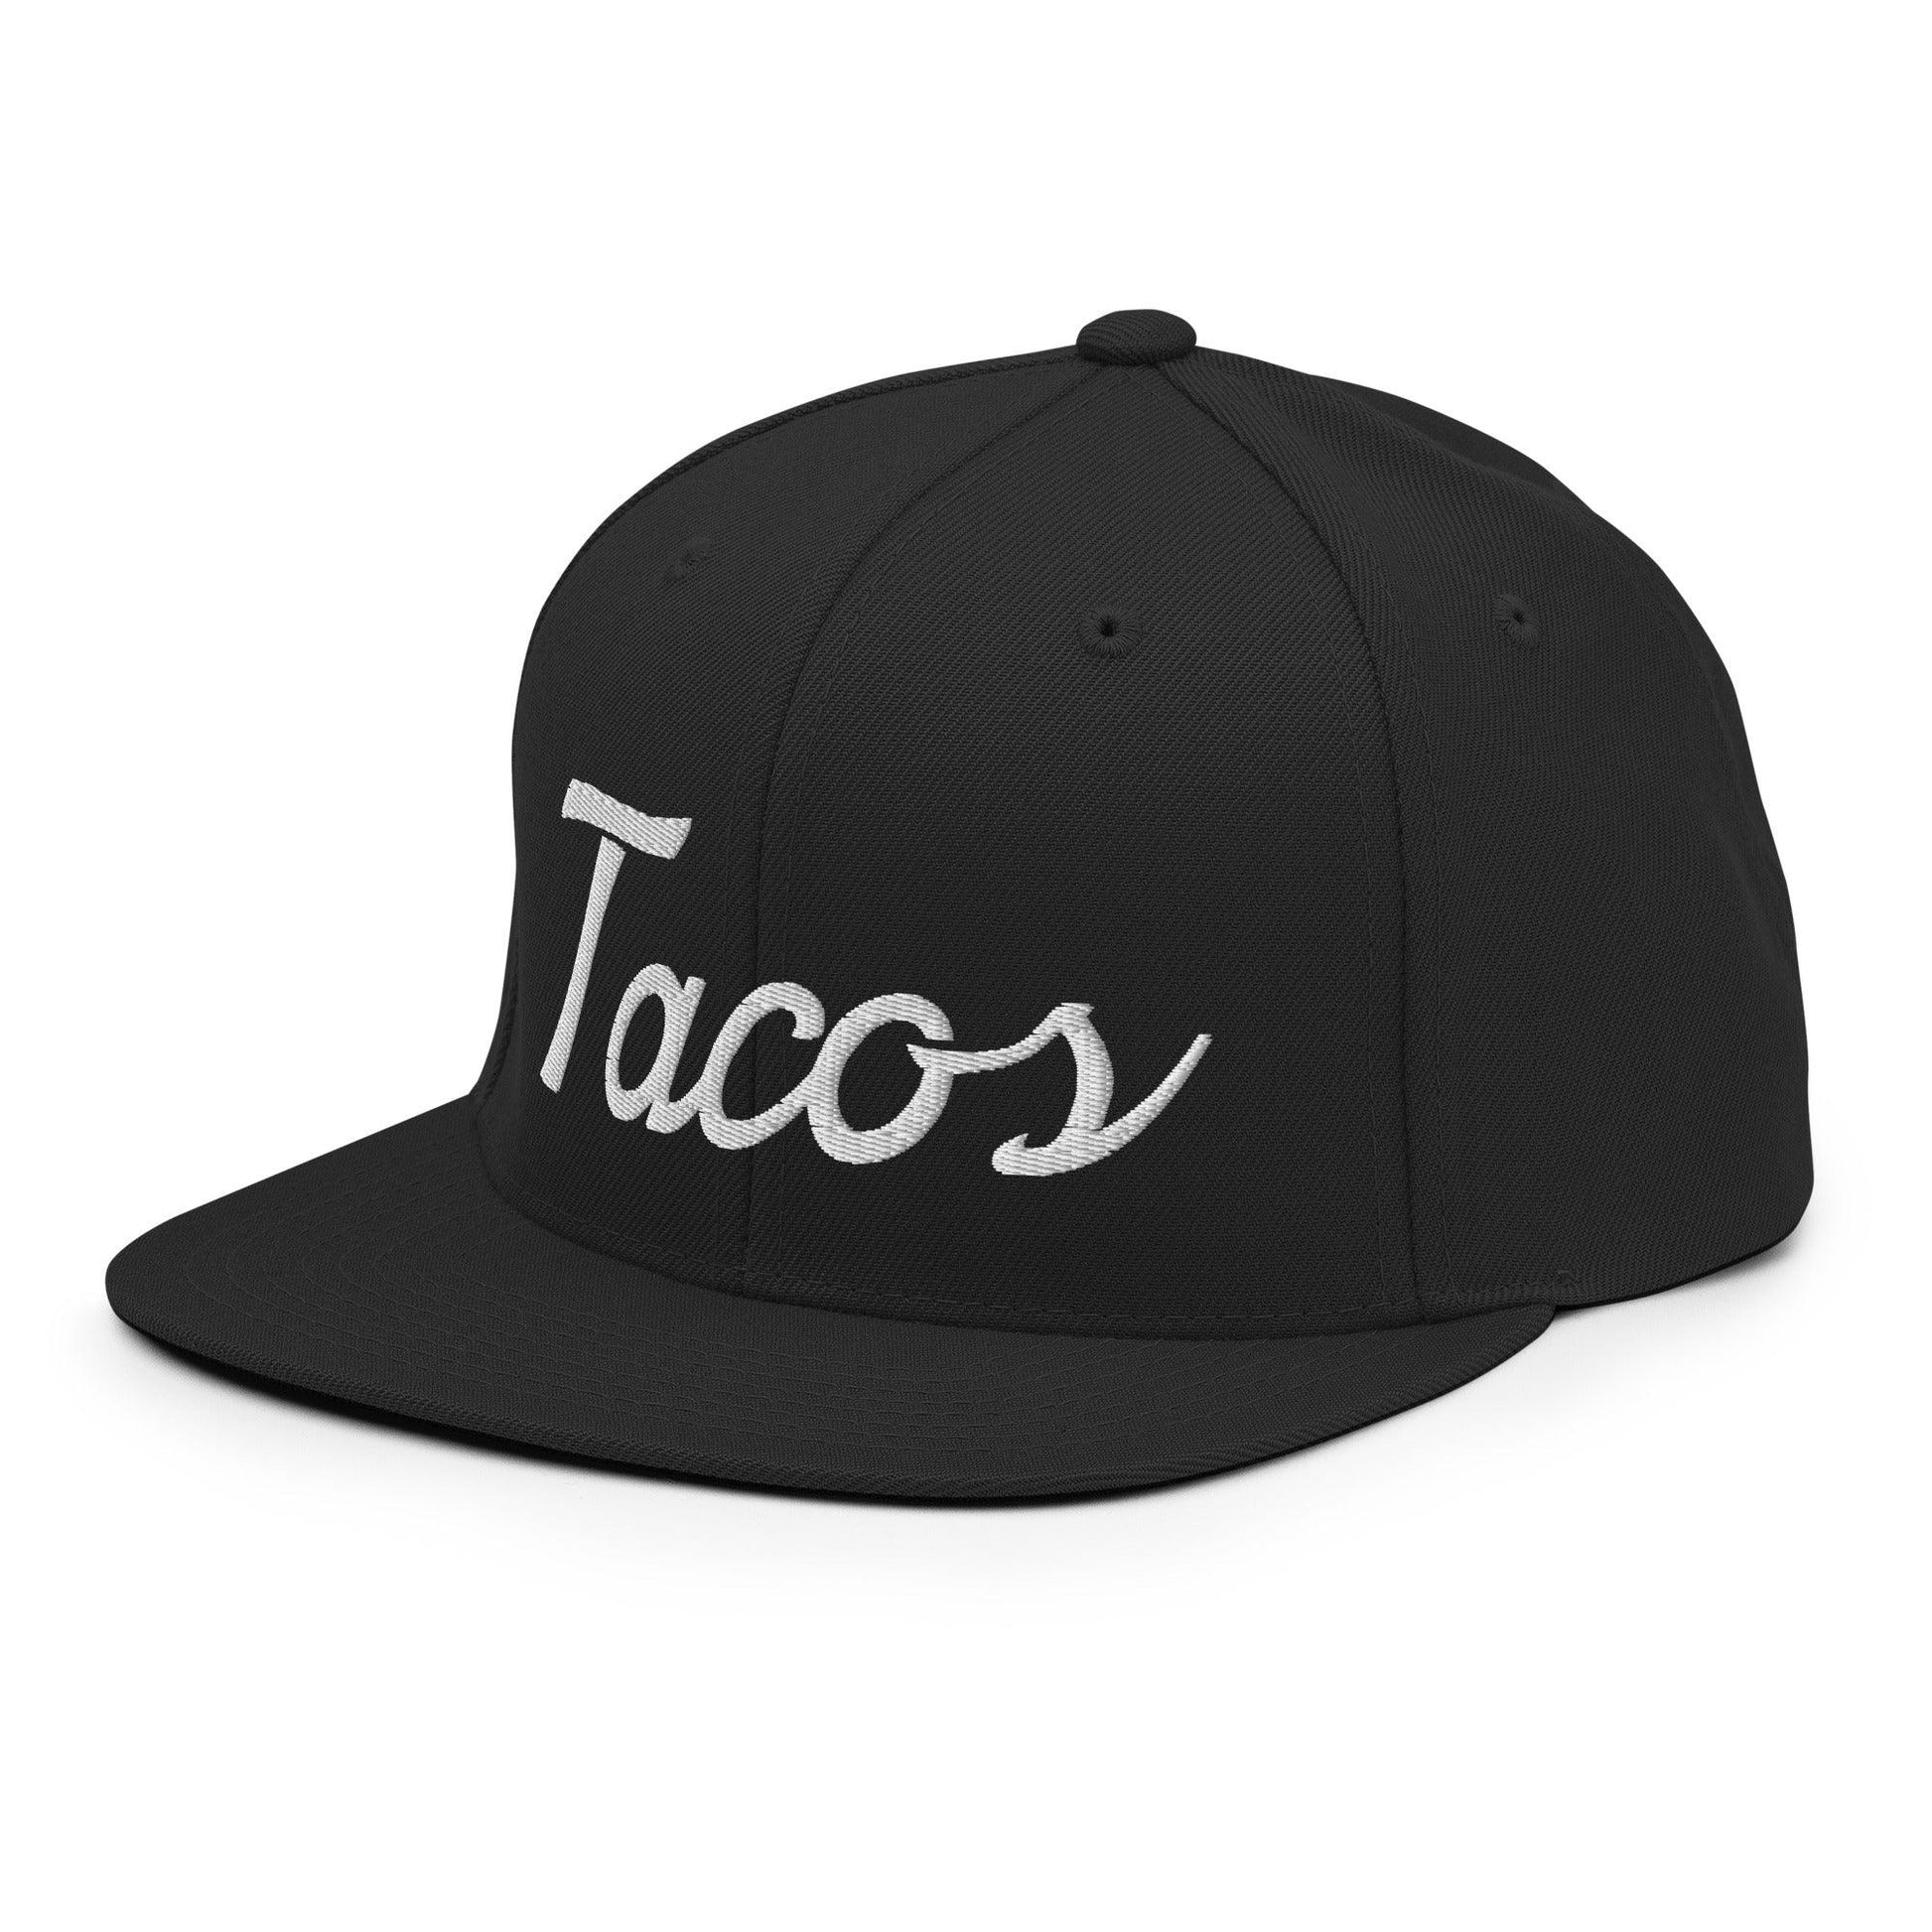 Tacos II Vintage Sports Script Snapback Hat Black